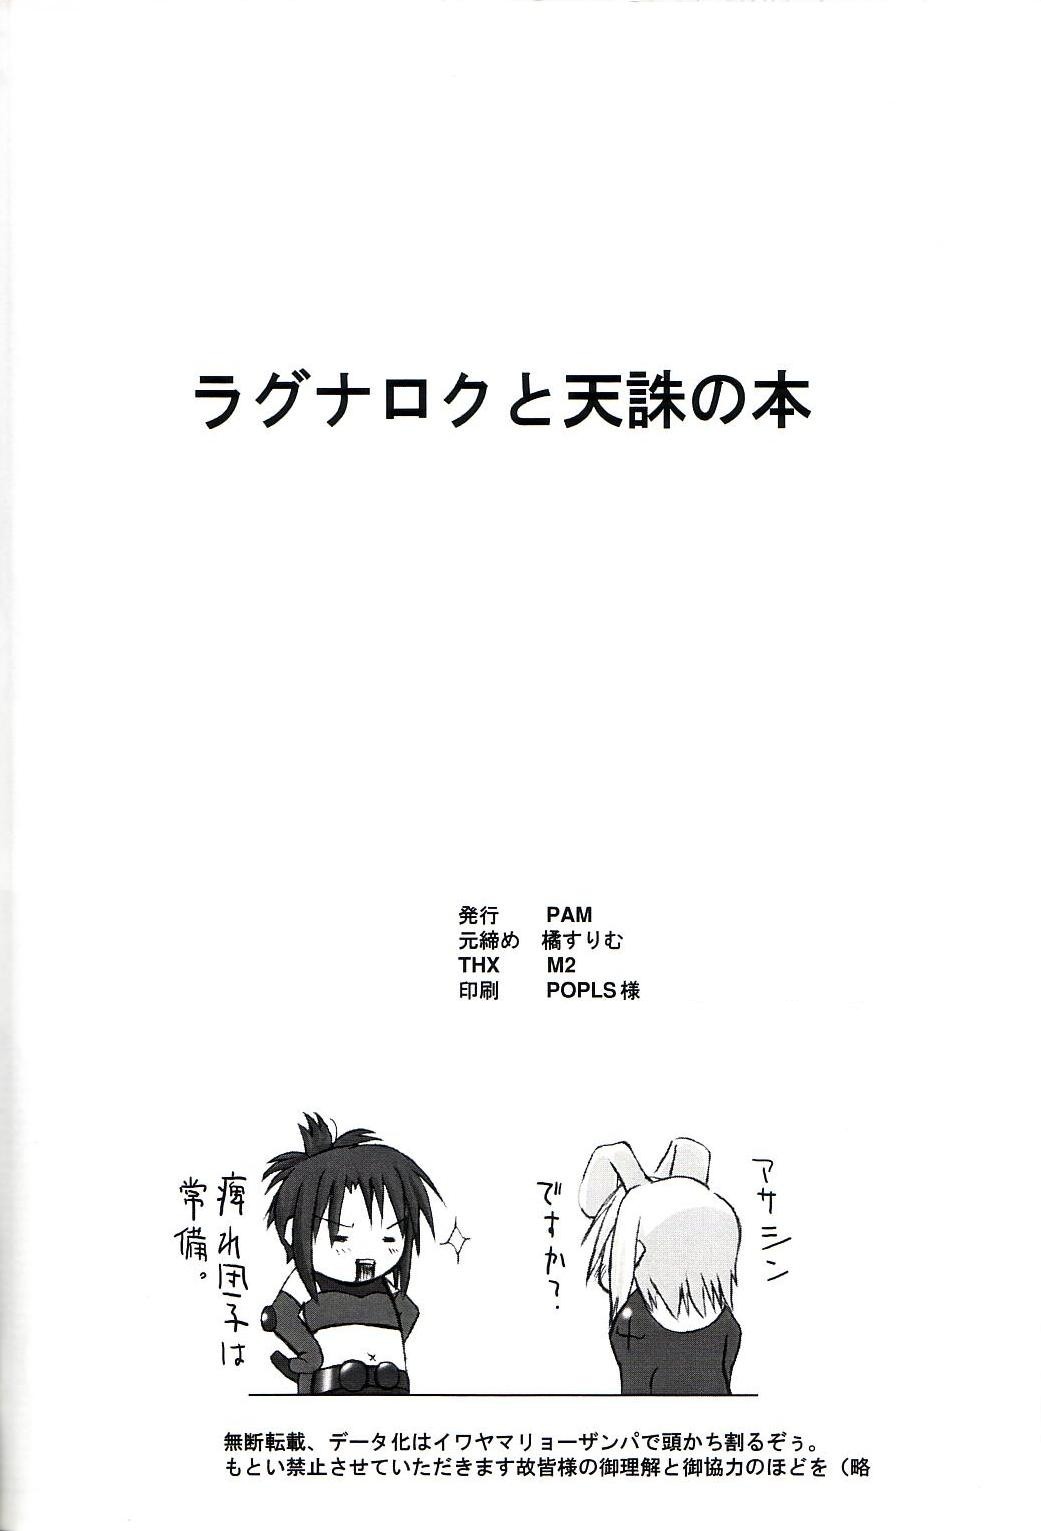 (CR34) [PAM (Tachibana Surimu, M2)] Ragnarok to Tenchu no Hon (Ragnarok Online, Tenchu) page 33 full